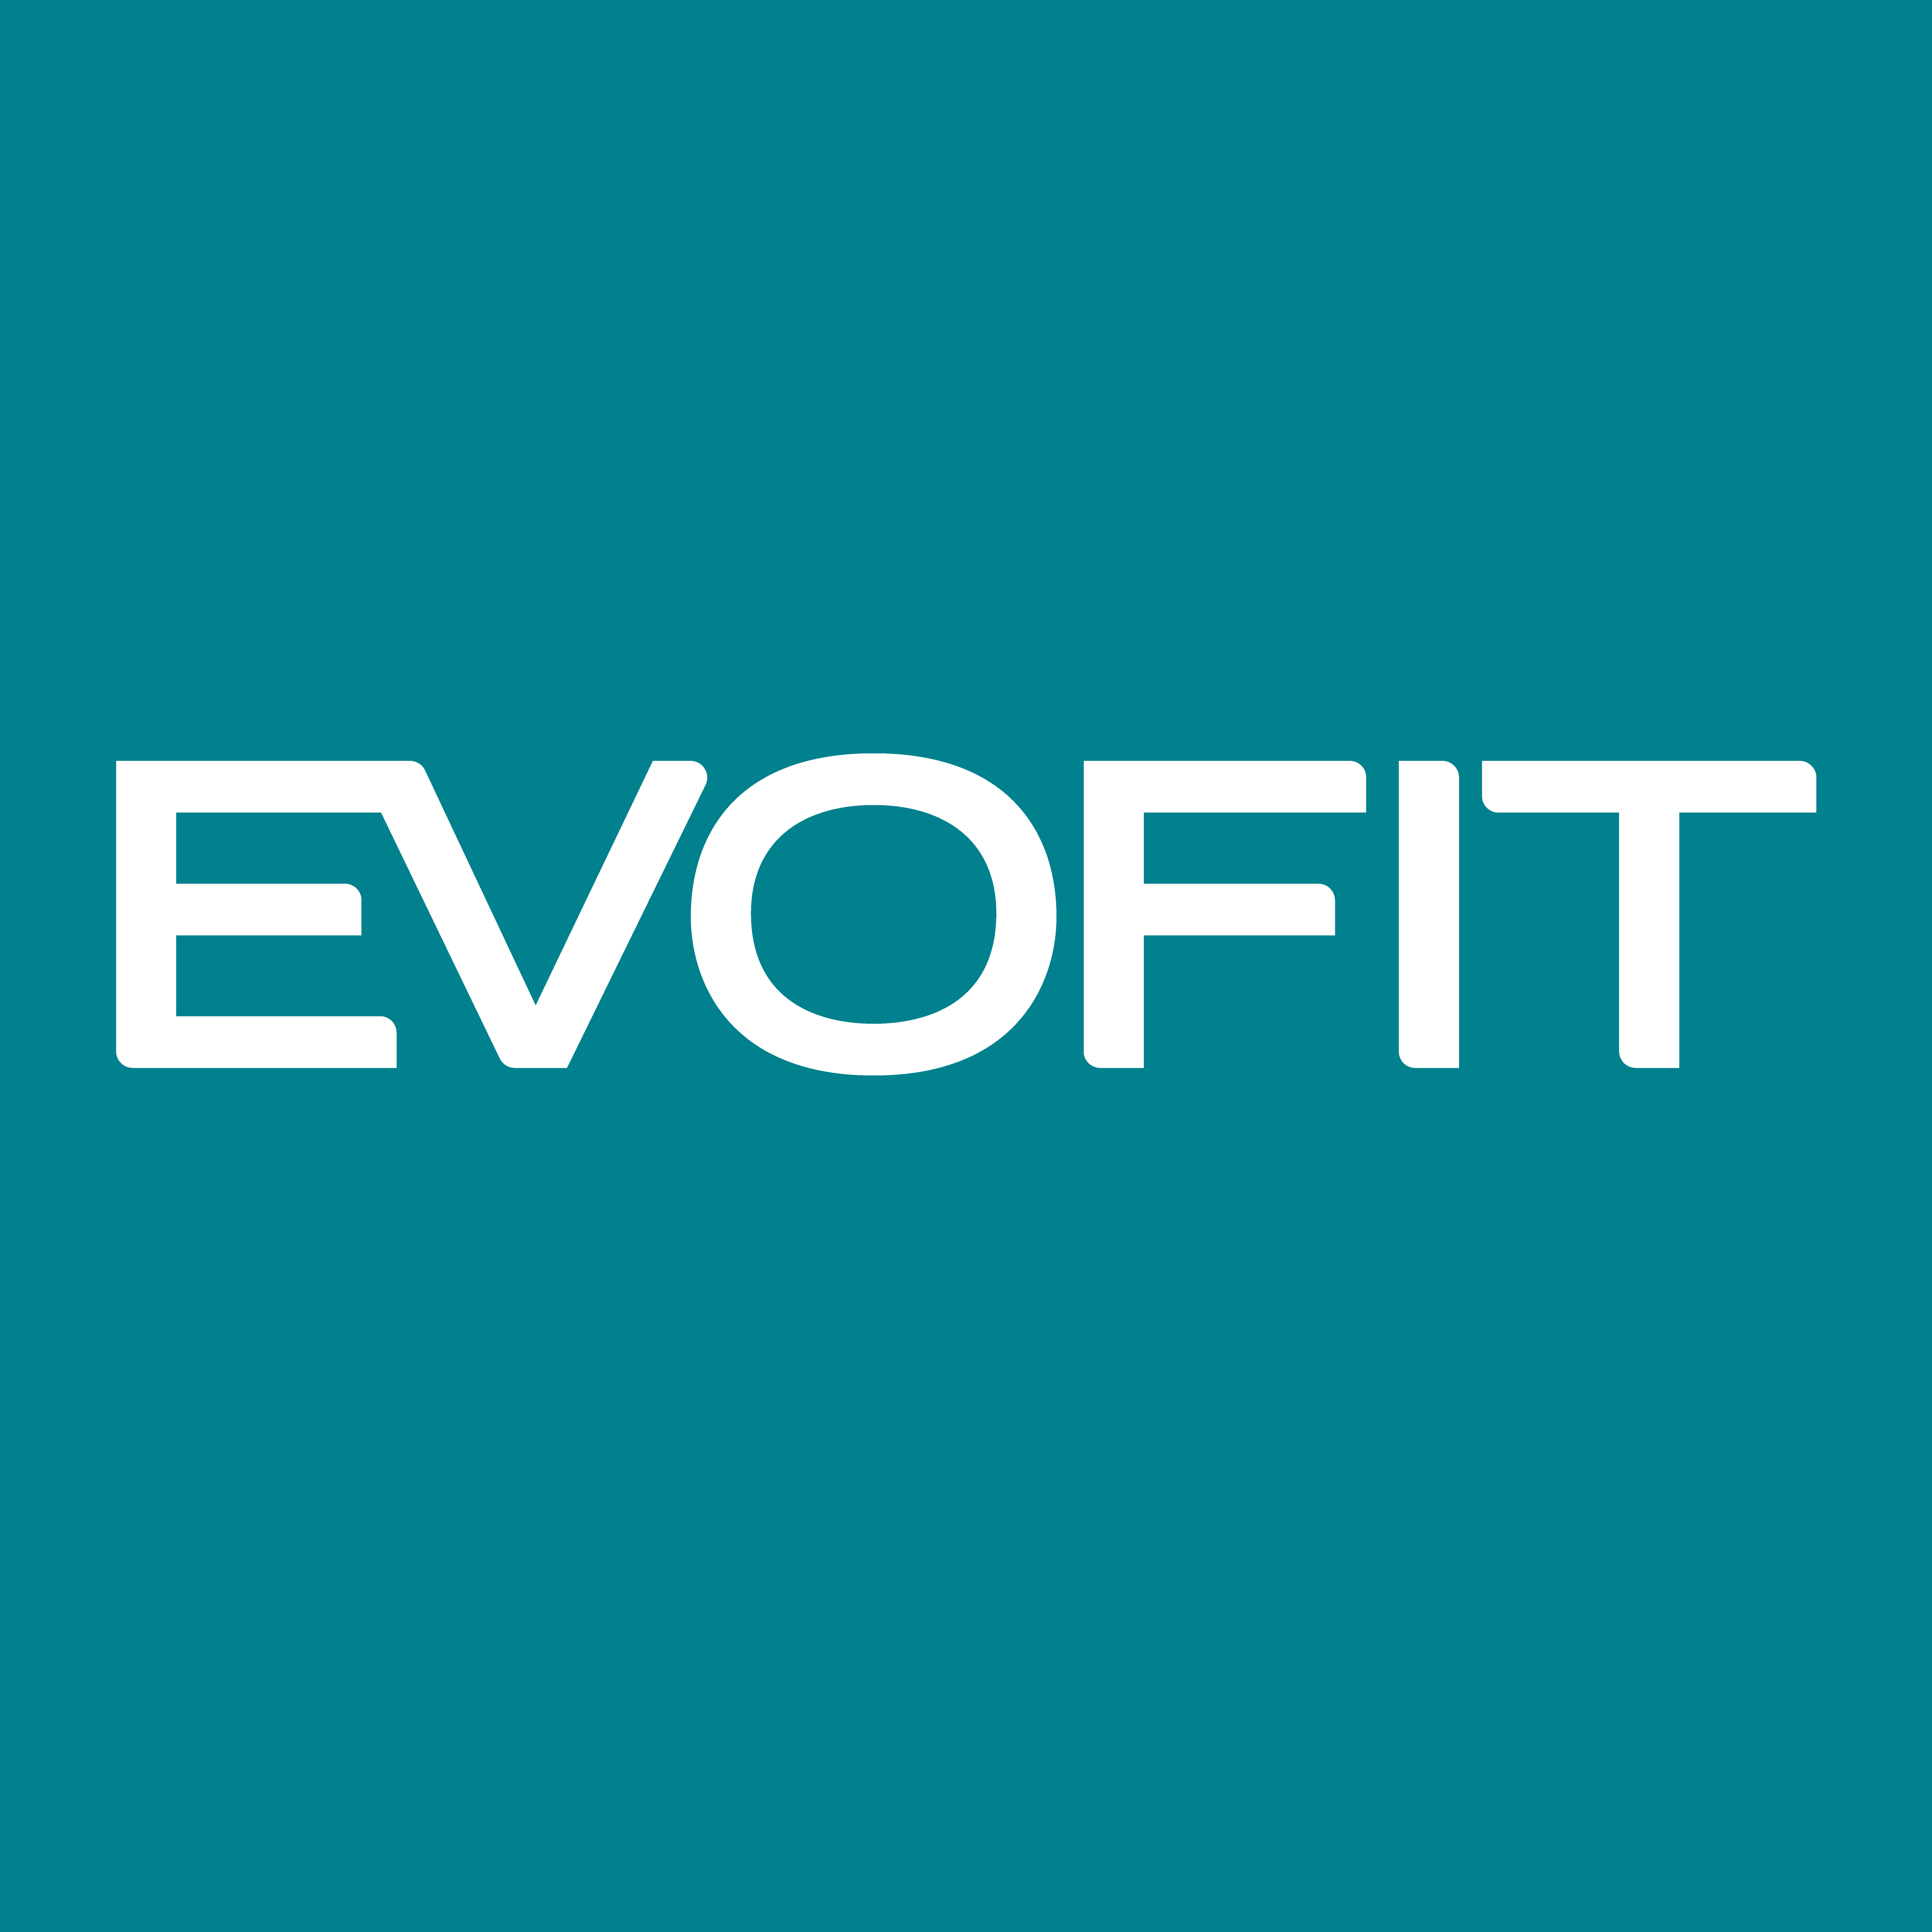 evofit-social-logo-01